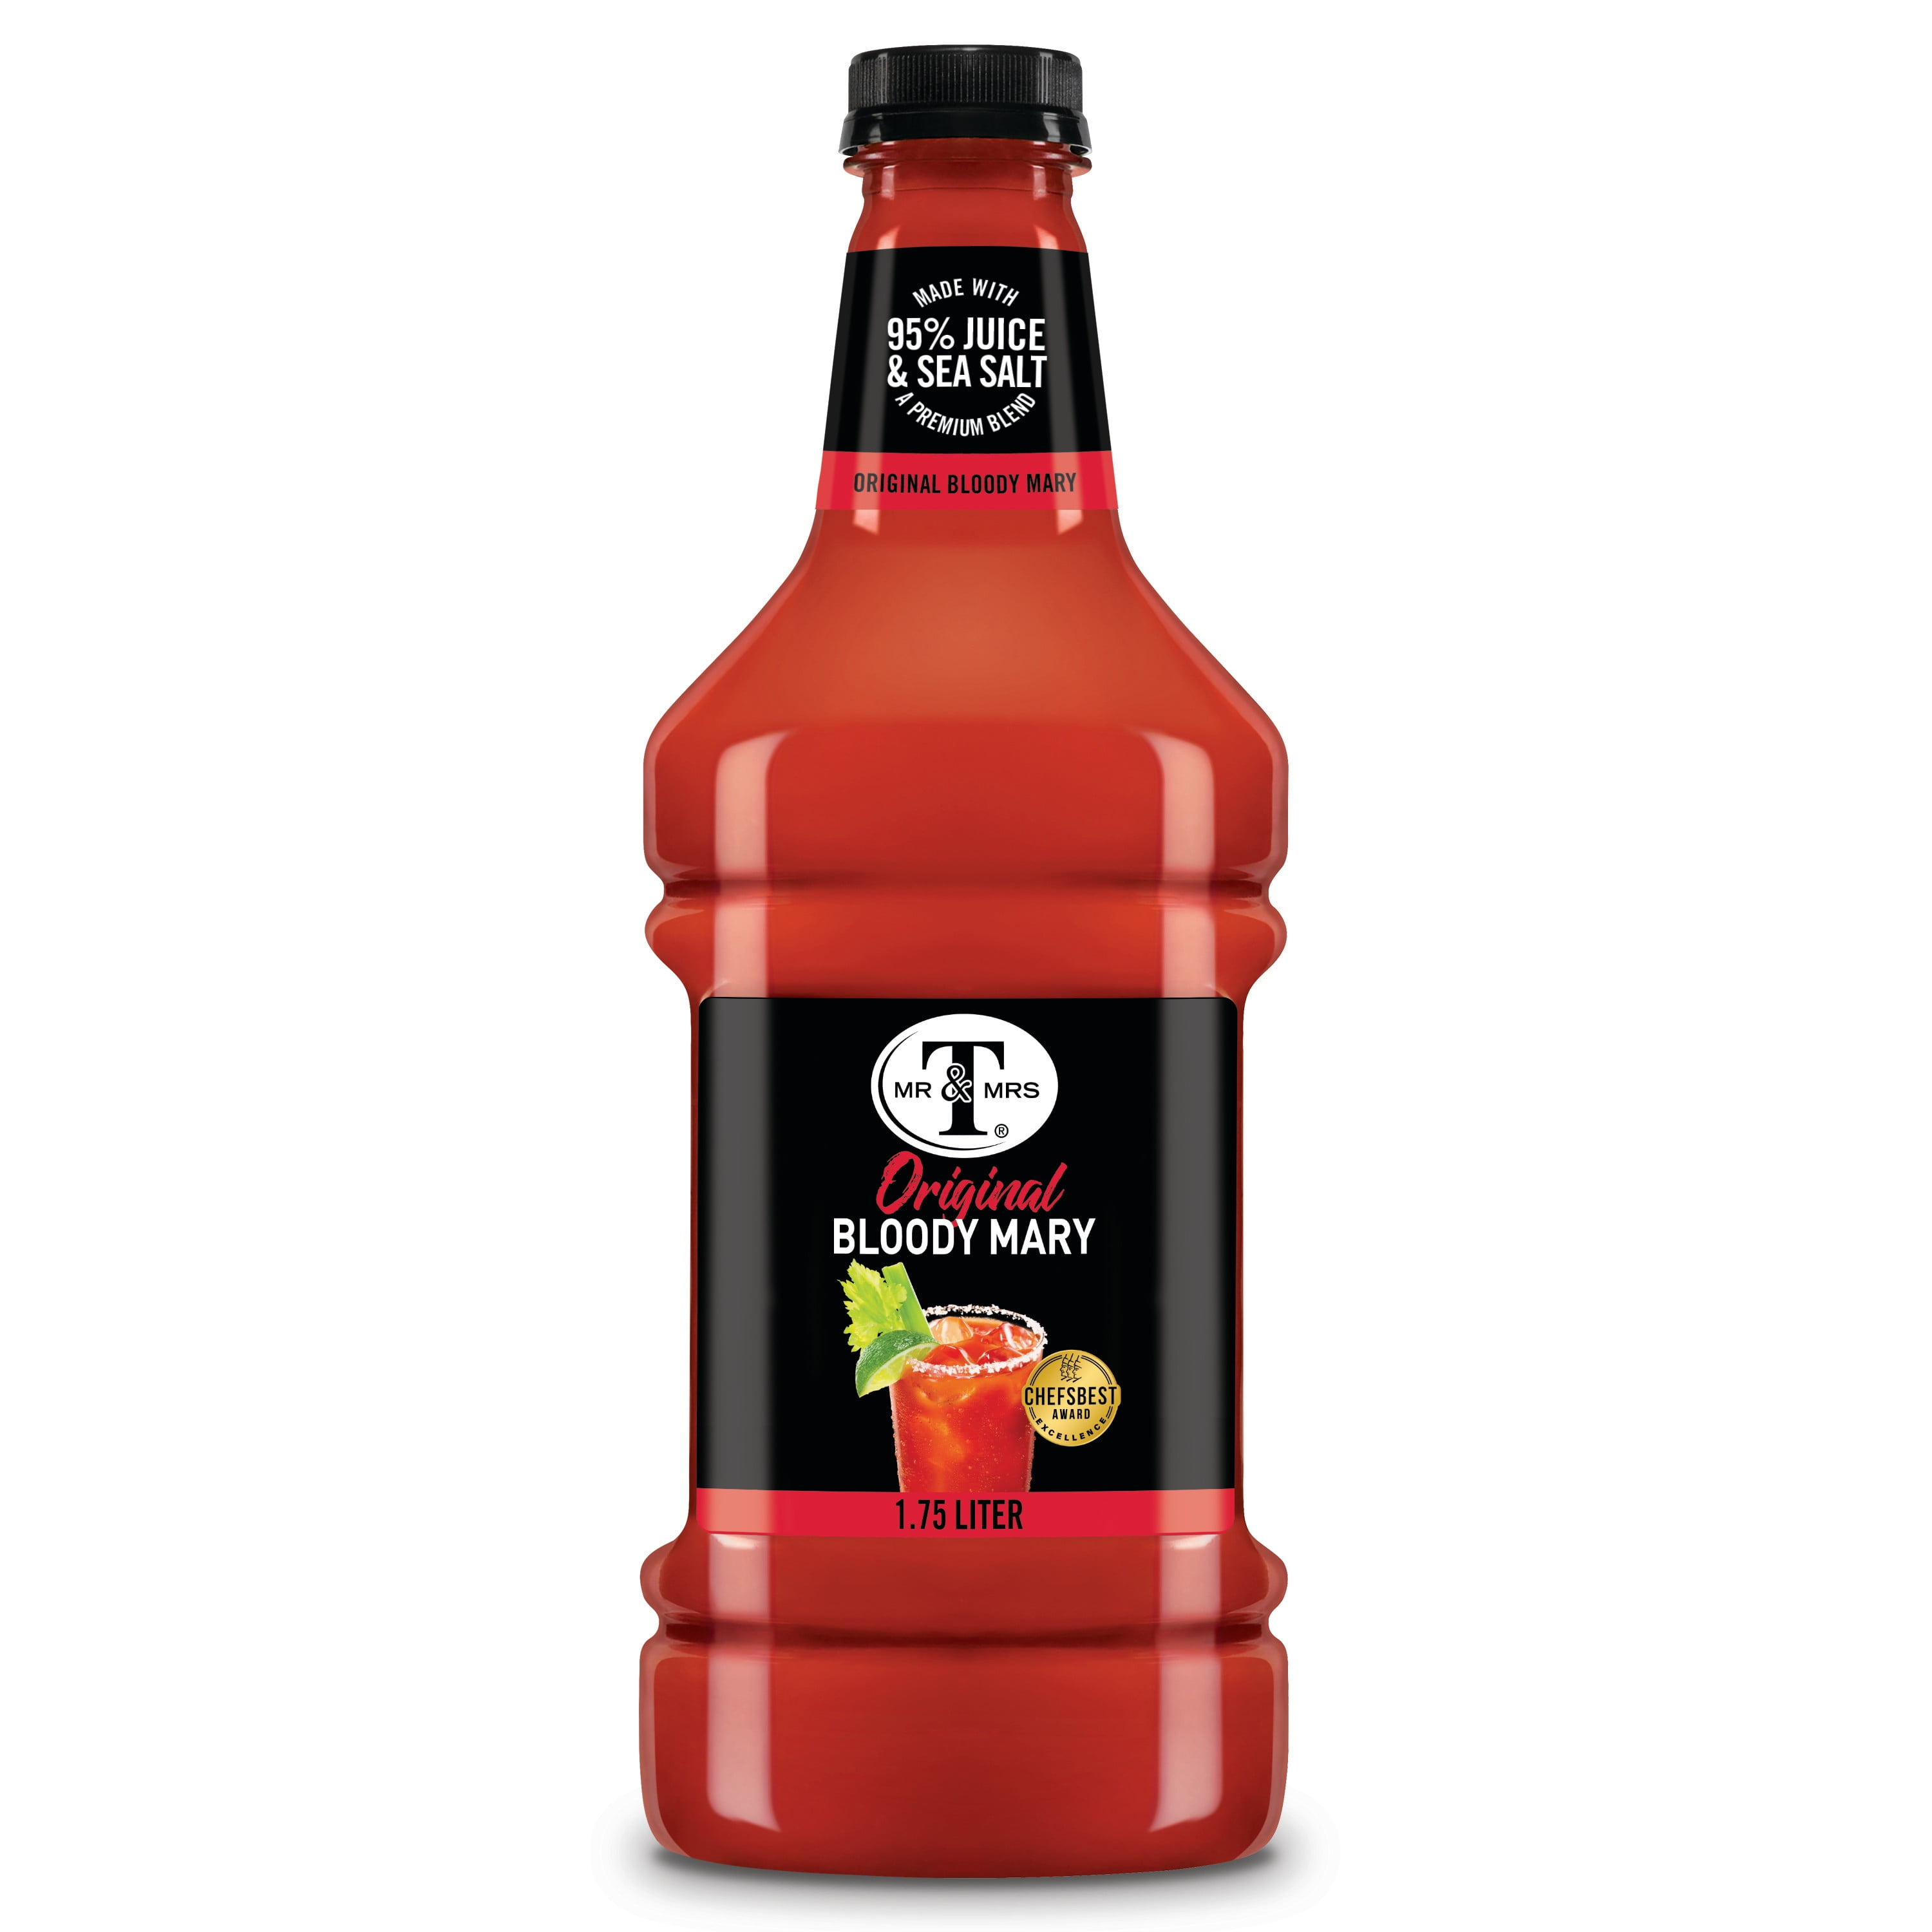 Mr & Mrs T Original Bloody Mary Mix, 59.2 oz, Bottle - Walmart.com